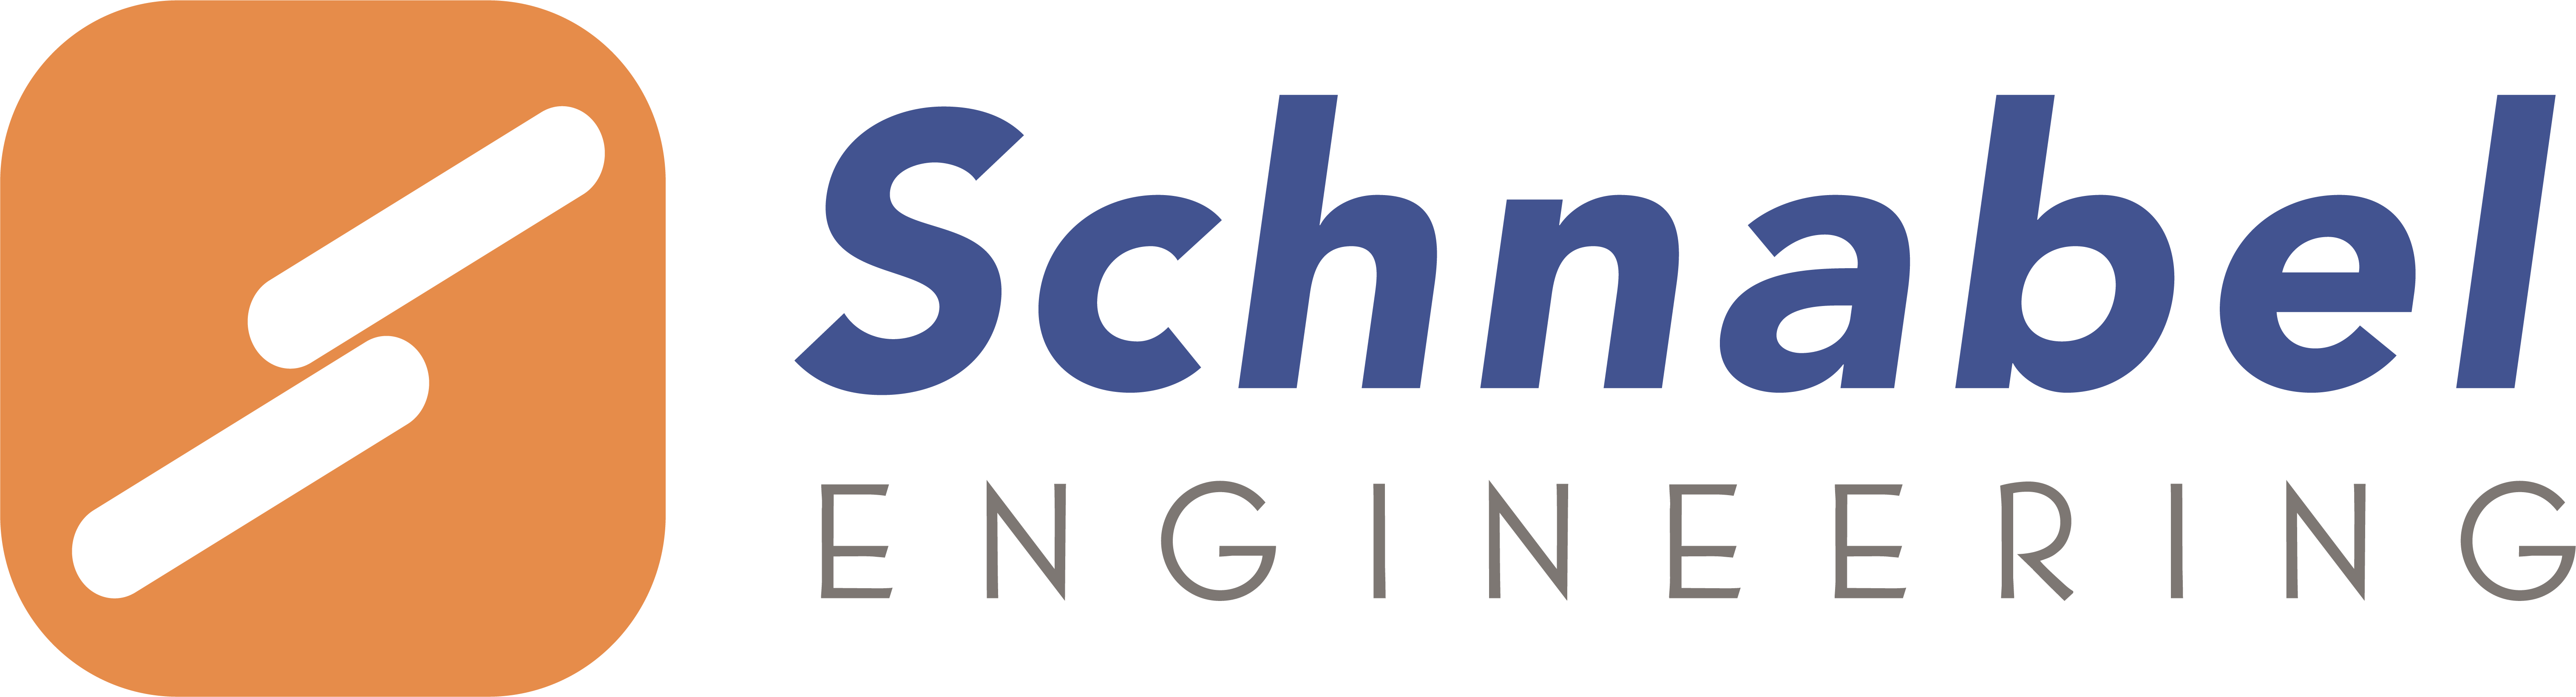 Schnabel Engineering Company Logo